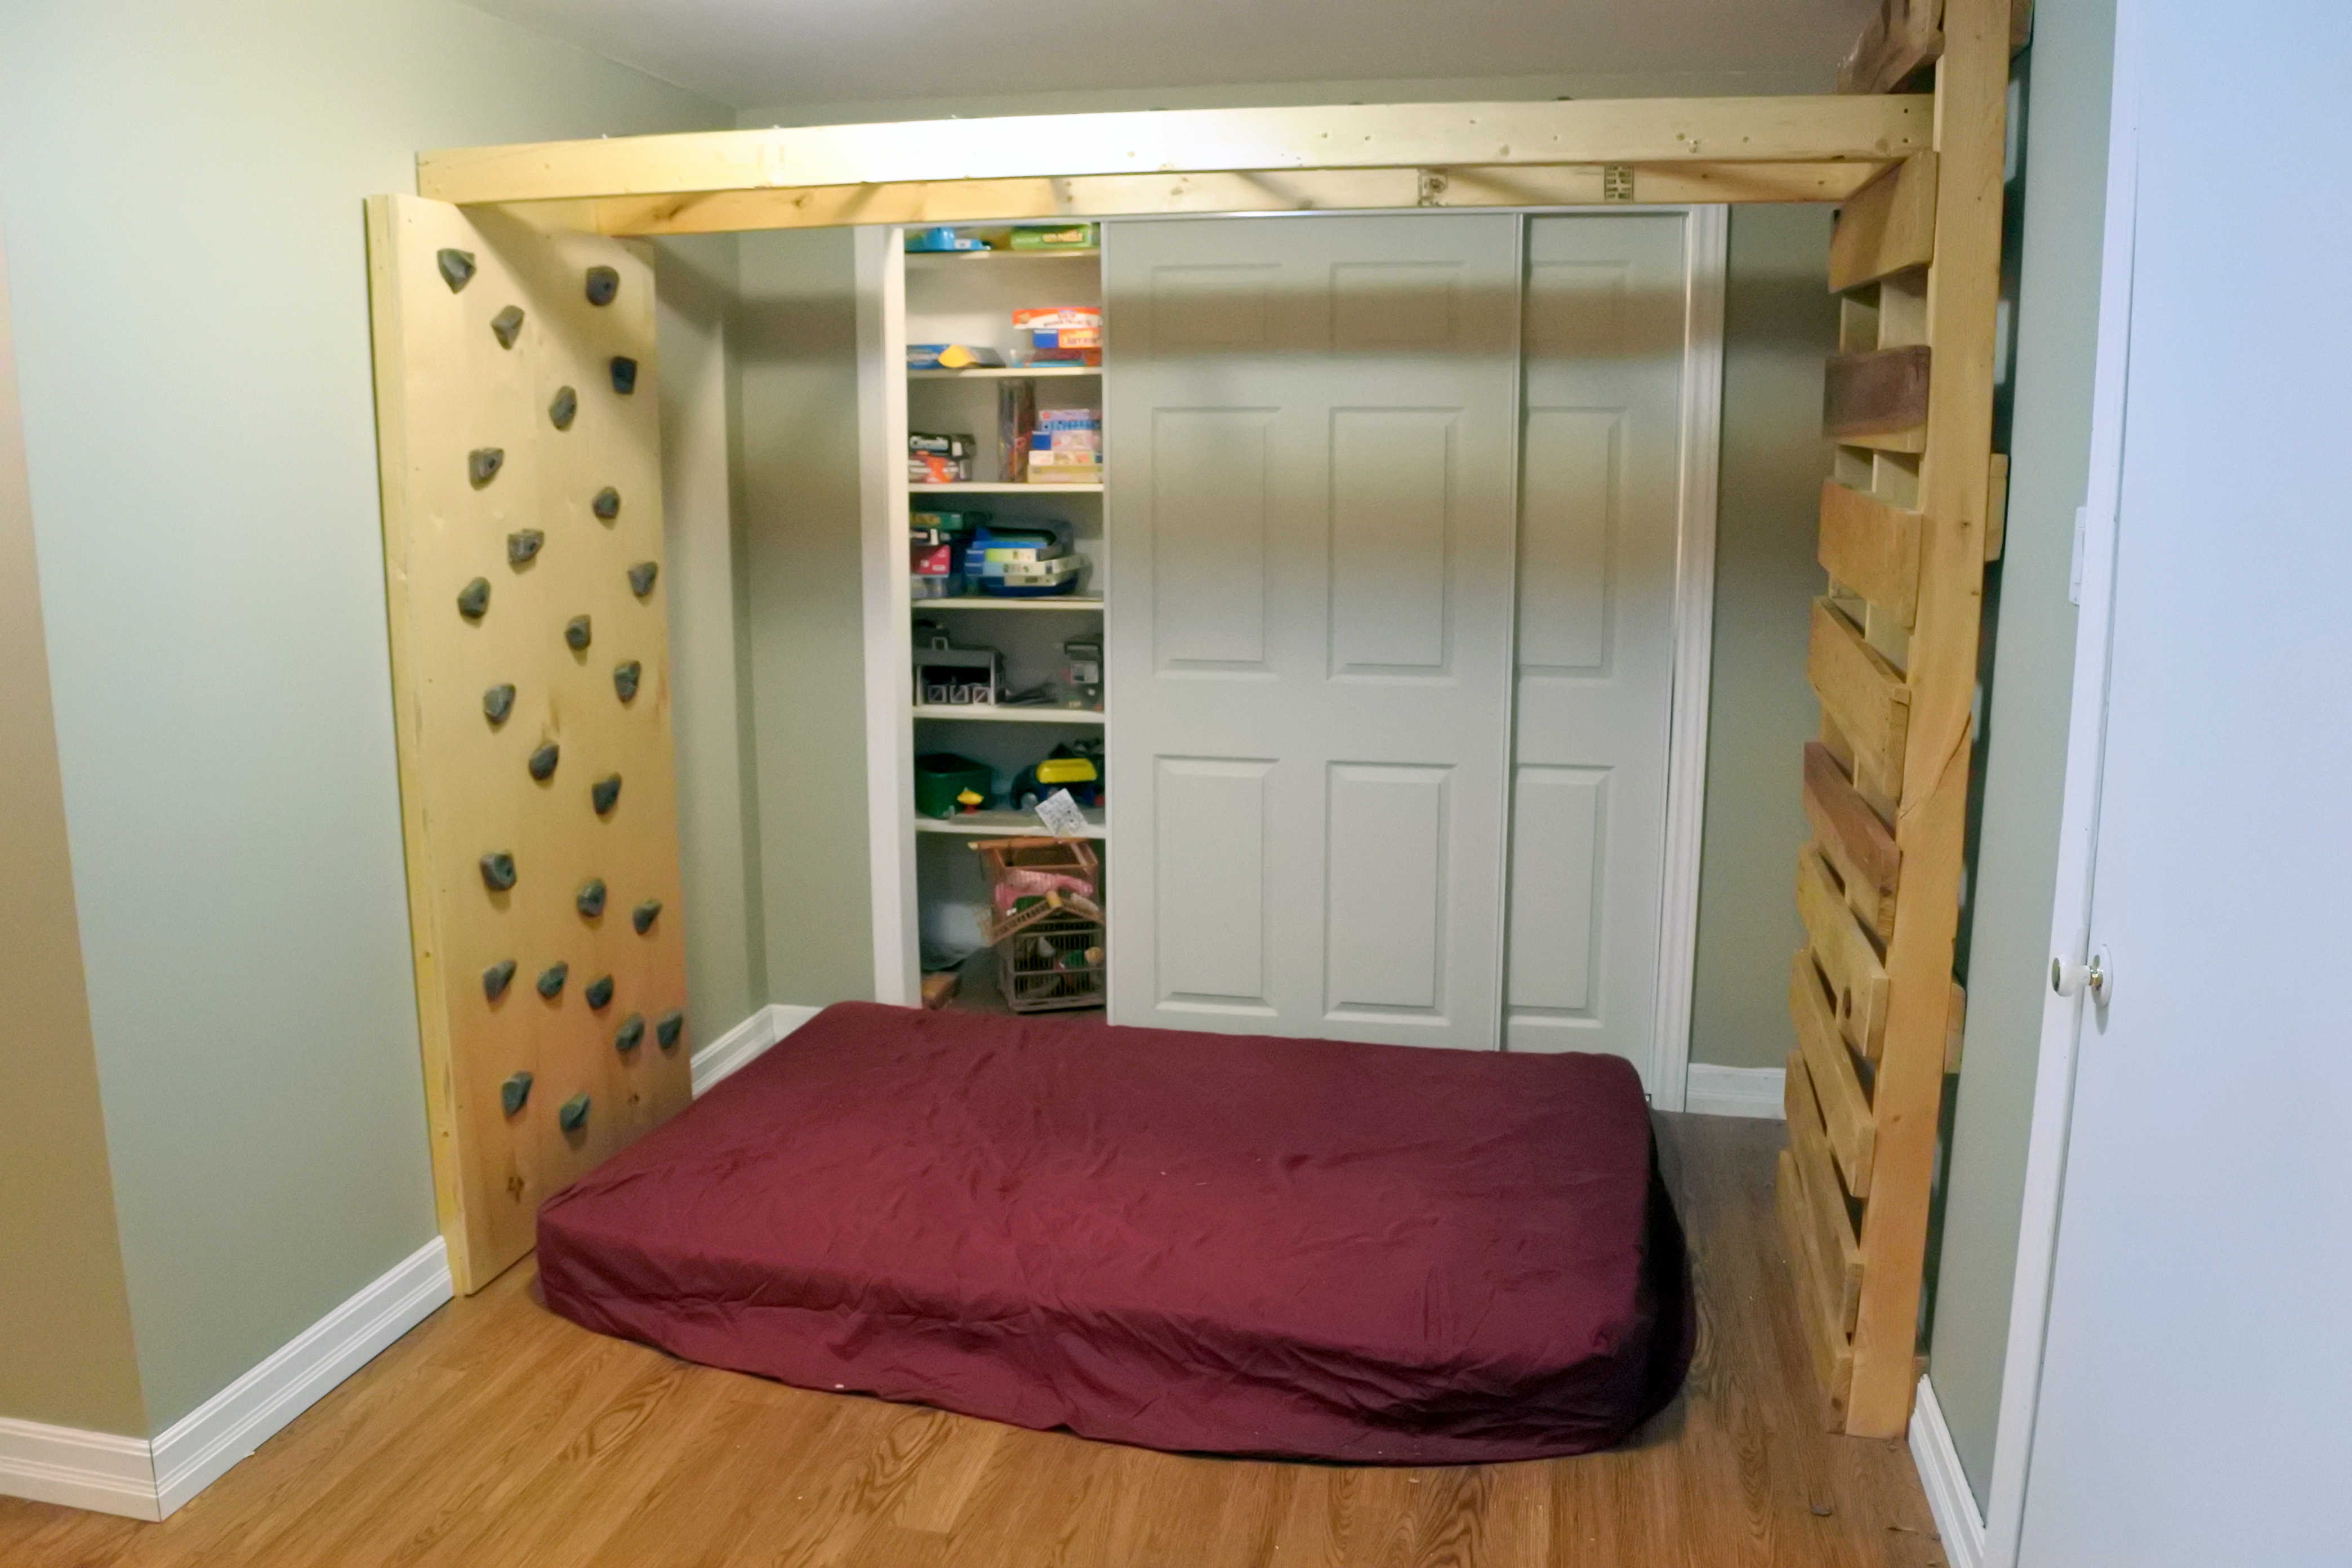 #indoorjunglegym DIY monkey bars indoor playground climbing wall storage closet pallet upcycle